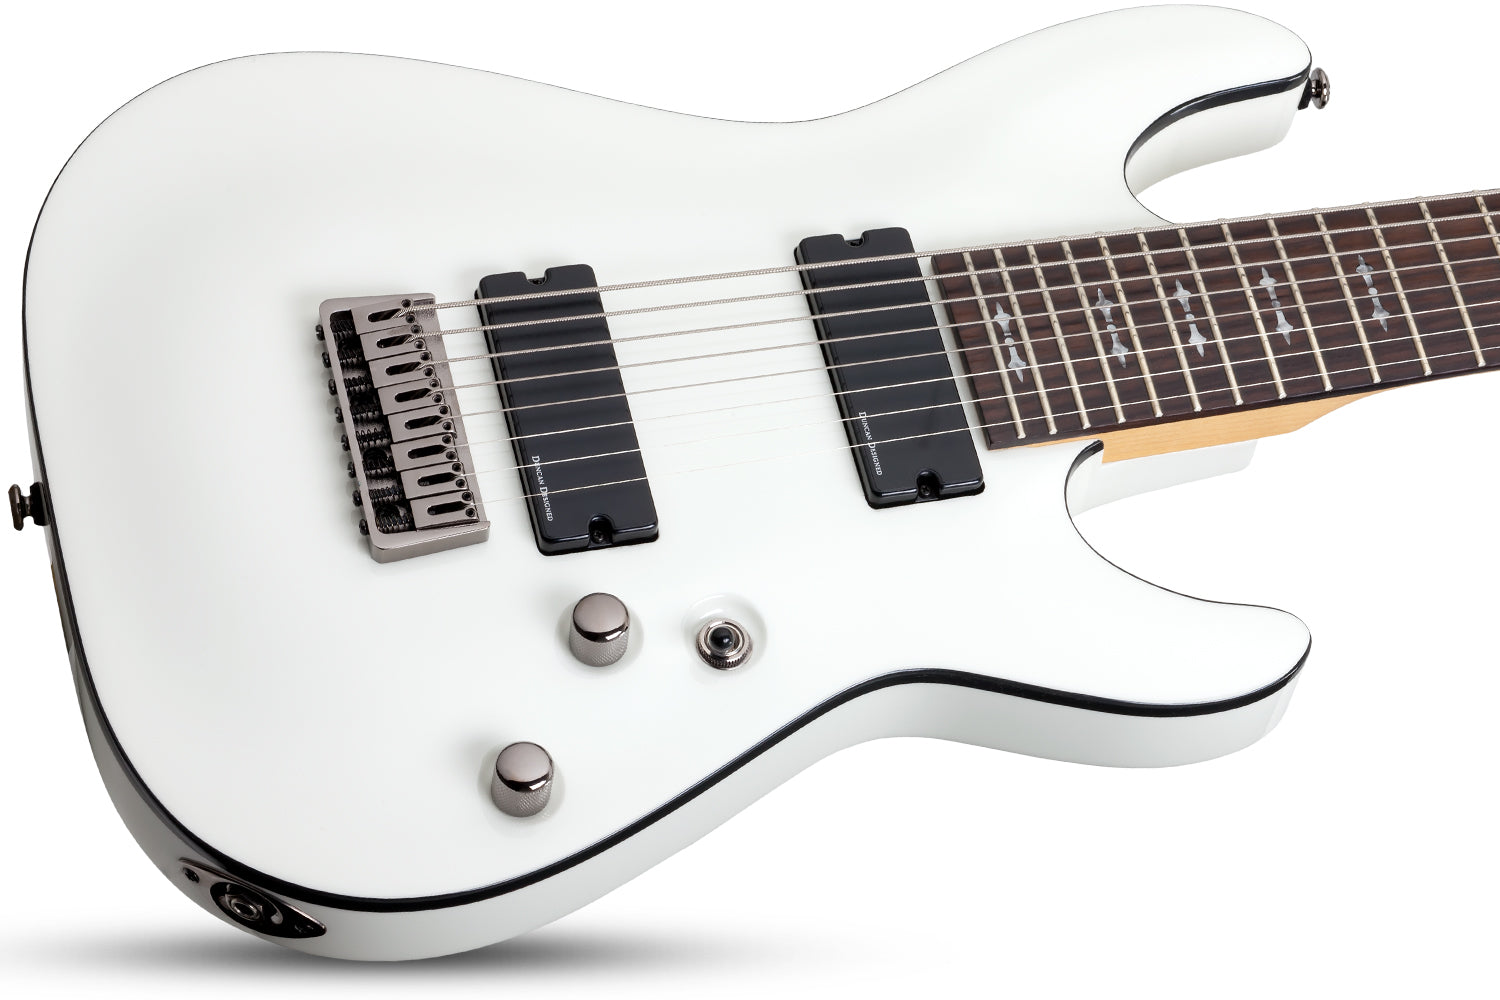 Schecter DEMON-8-VWHT Vintage White 8 String Guitar with Duncan Designed HB-105 3263-SHC